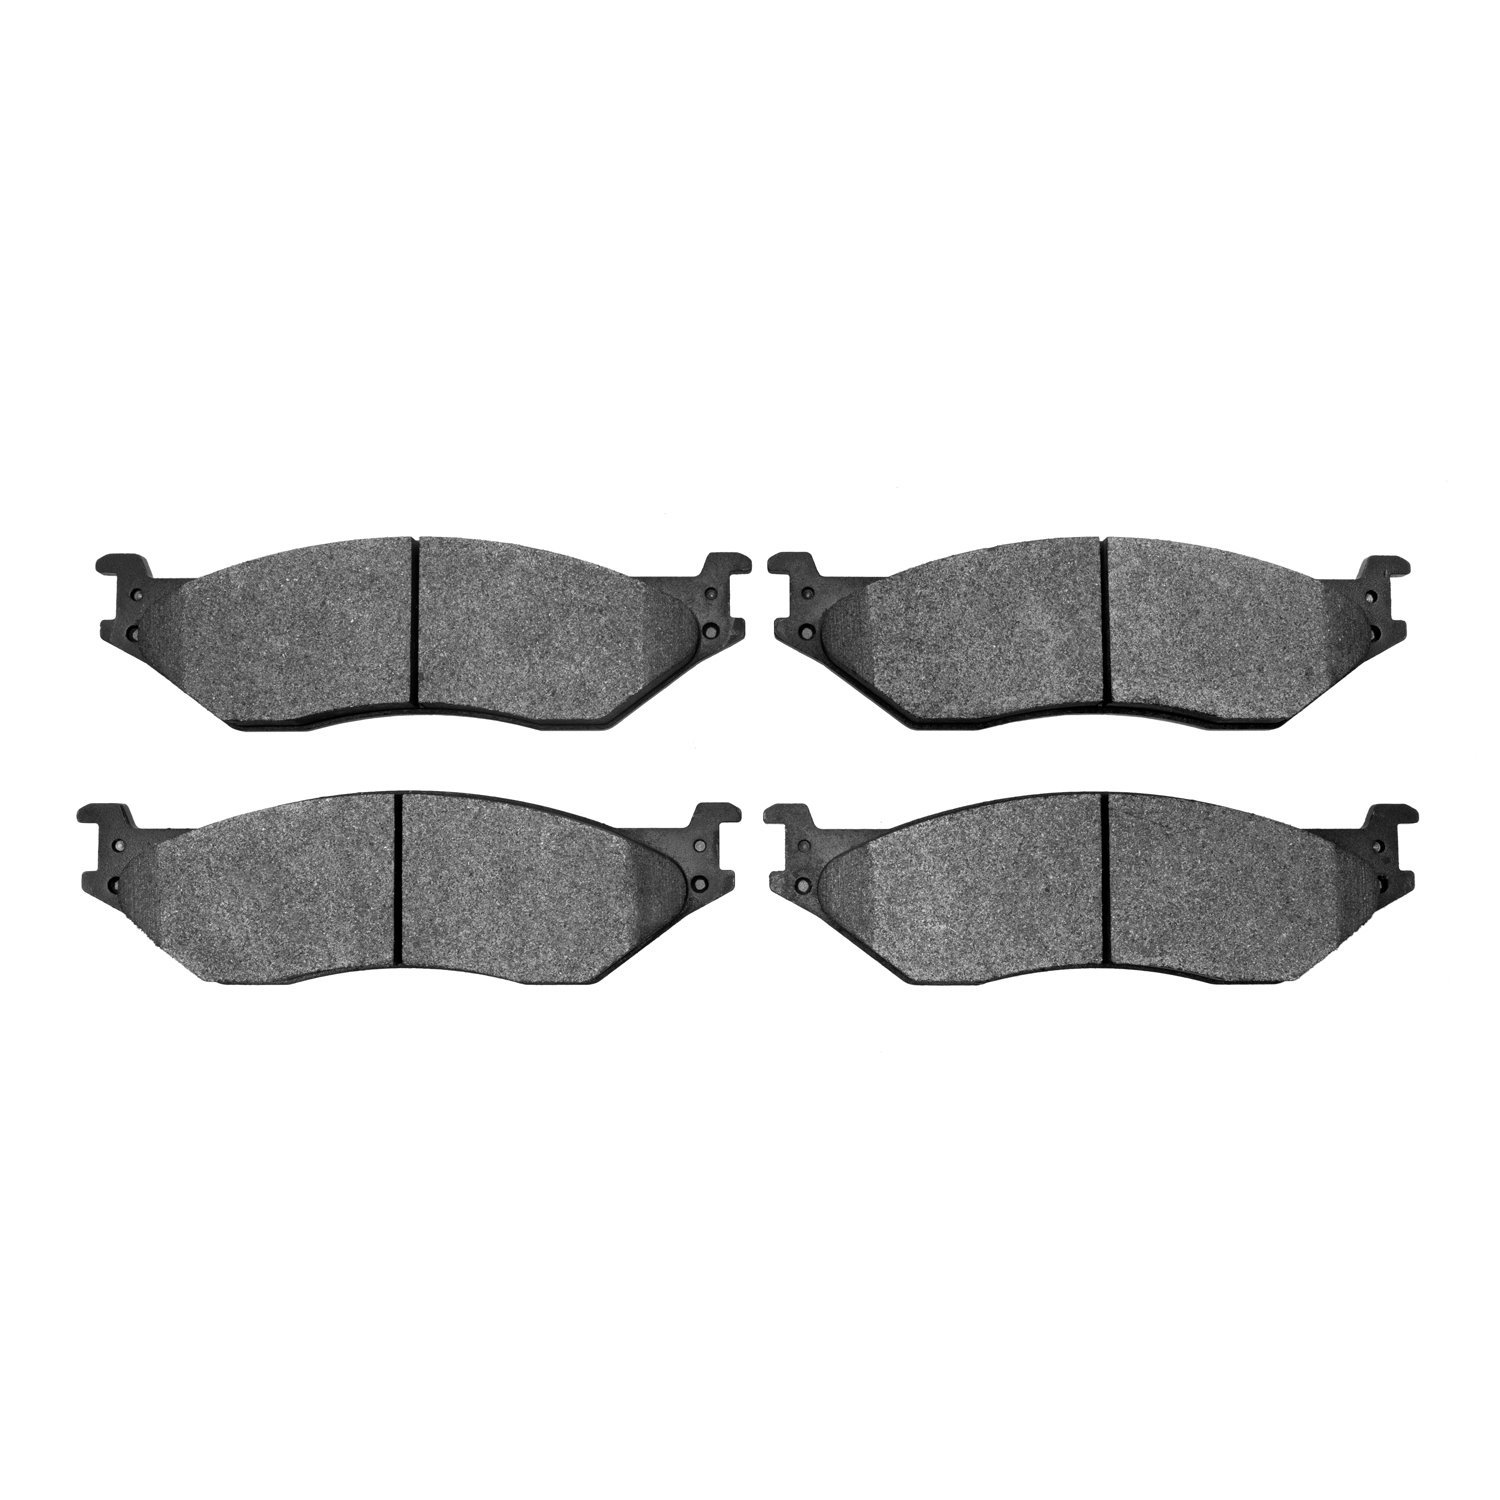 1551-1066-00 5000 Advanced Semi-Metallic Brake Pads, Fits Select Multiple Makes/Models, Position: Fr,Front,Fr & Rr,Rear,Rr